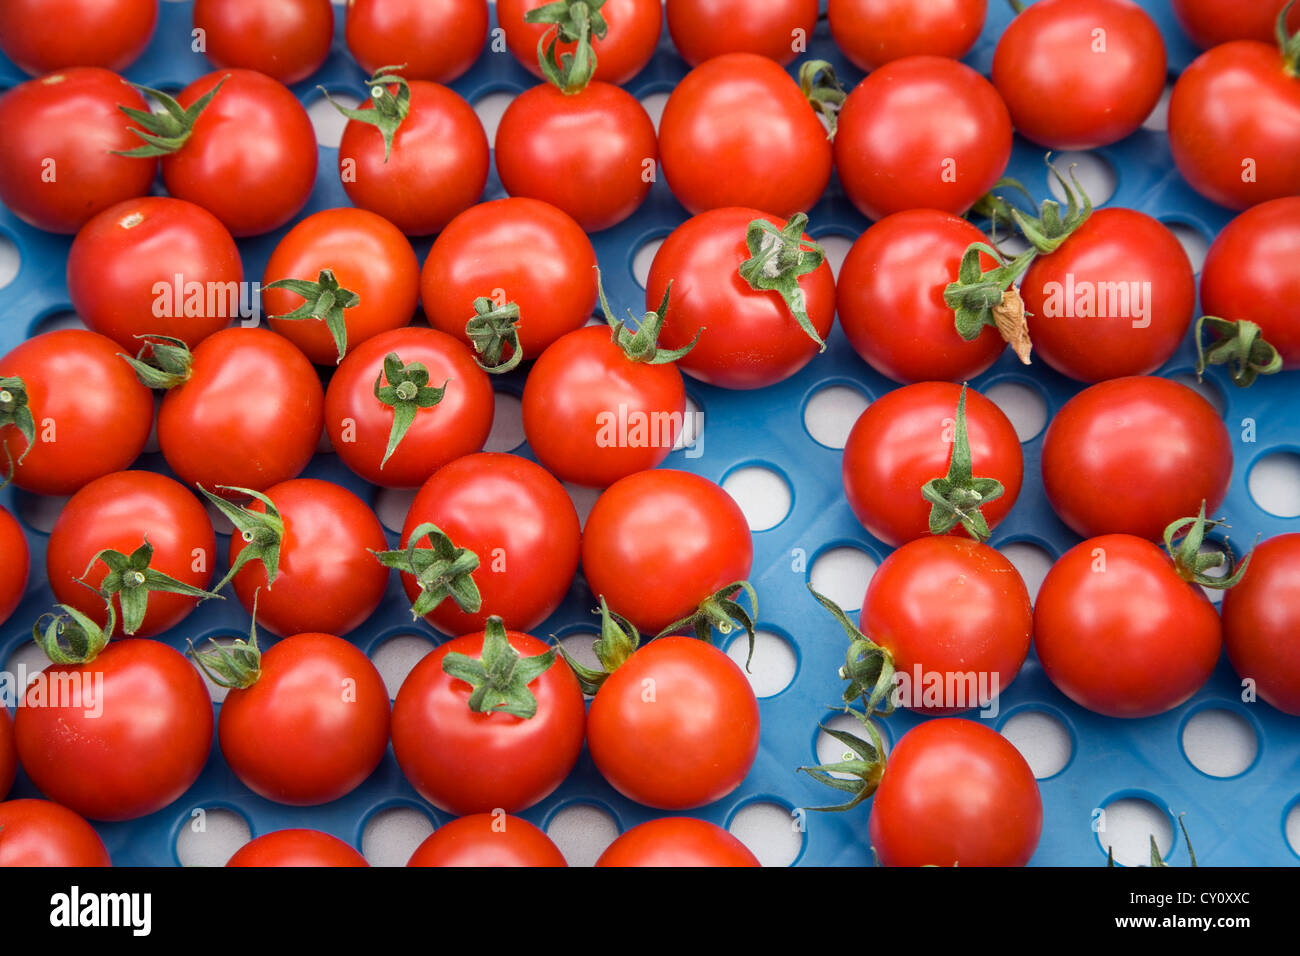 Plastic crate with horticulturist's crop of red tomatoes (Solanum lycopersicum / Lycopersicon esculentum) Stock Photo